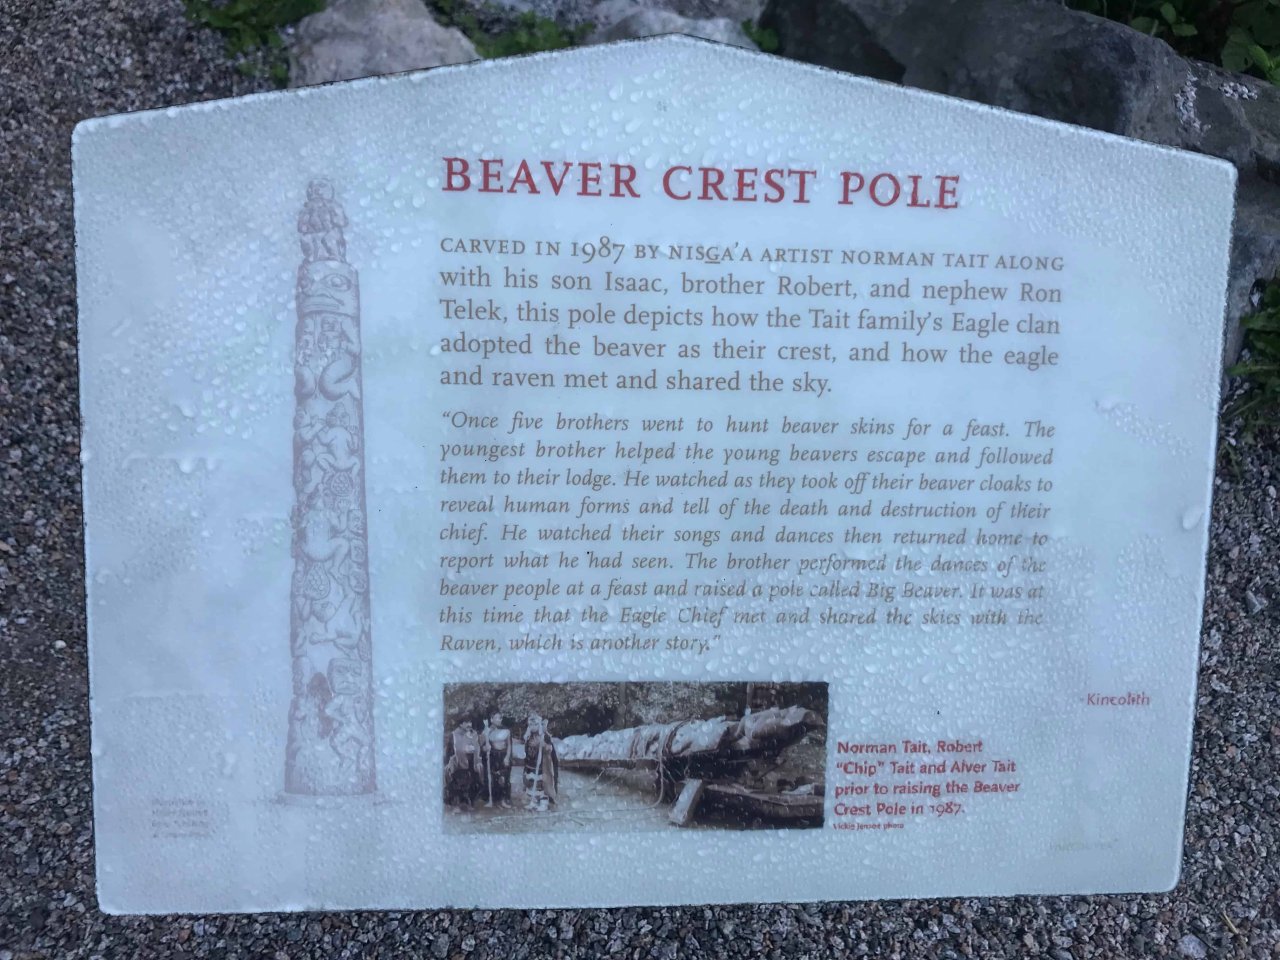 Beaver Crest Totem Pole Plaque
Source: VHF Files, Jessica Quan